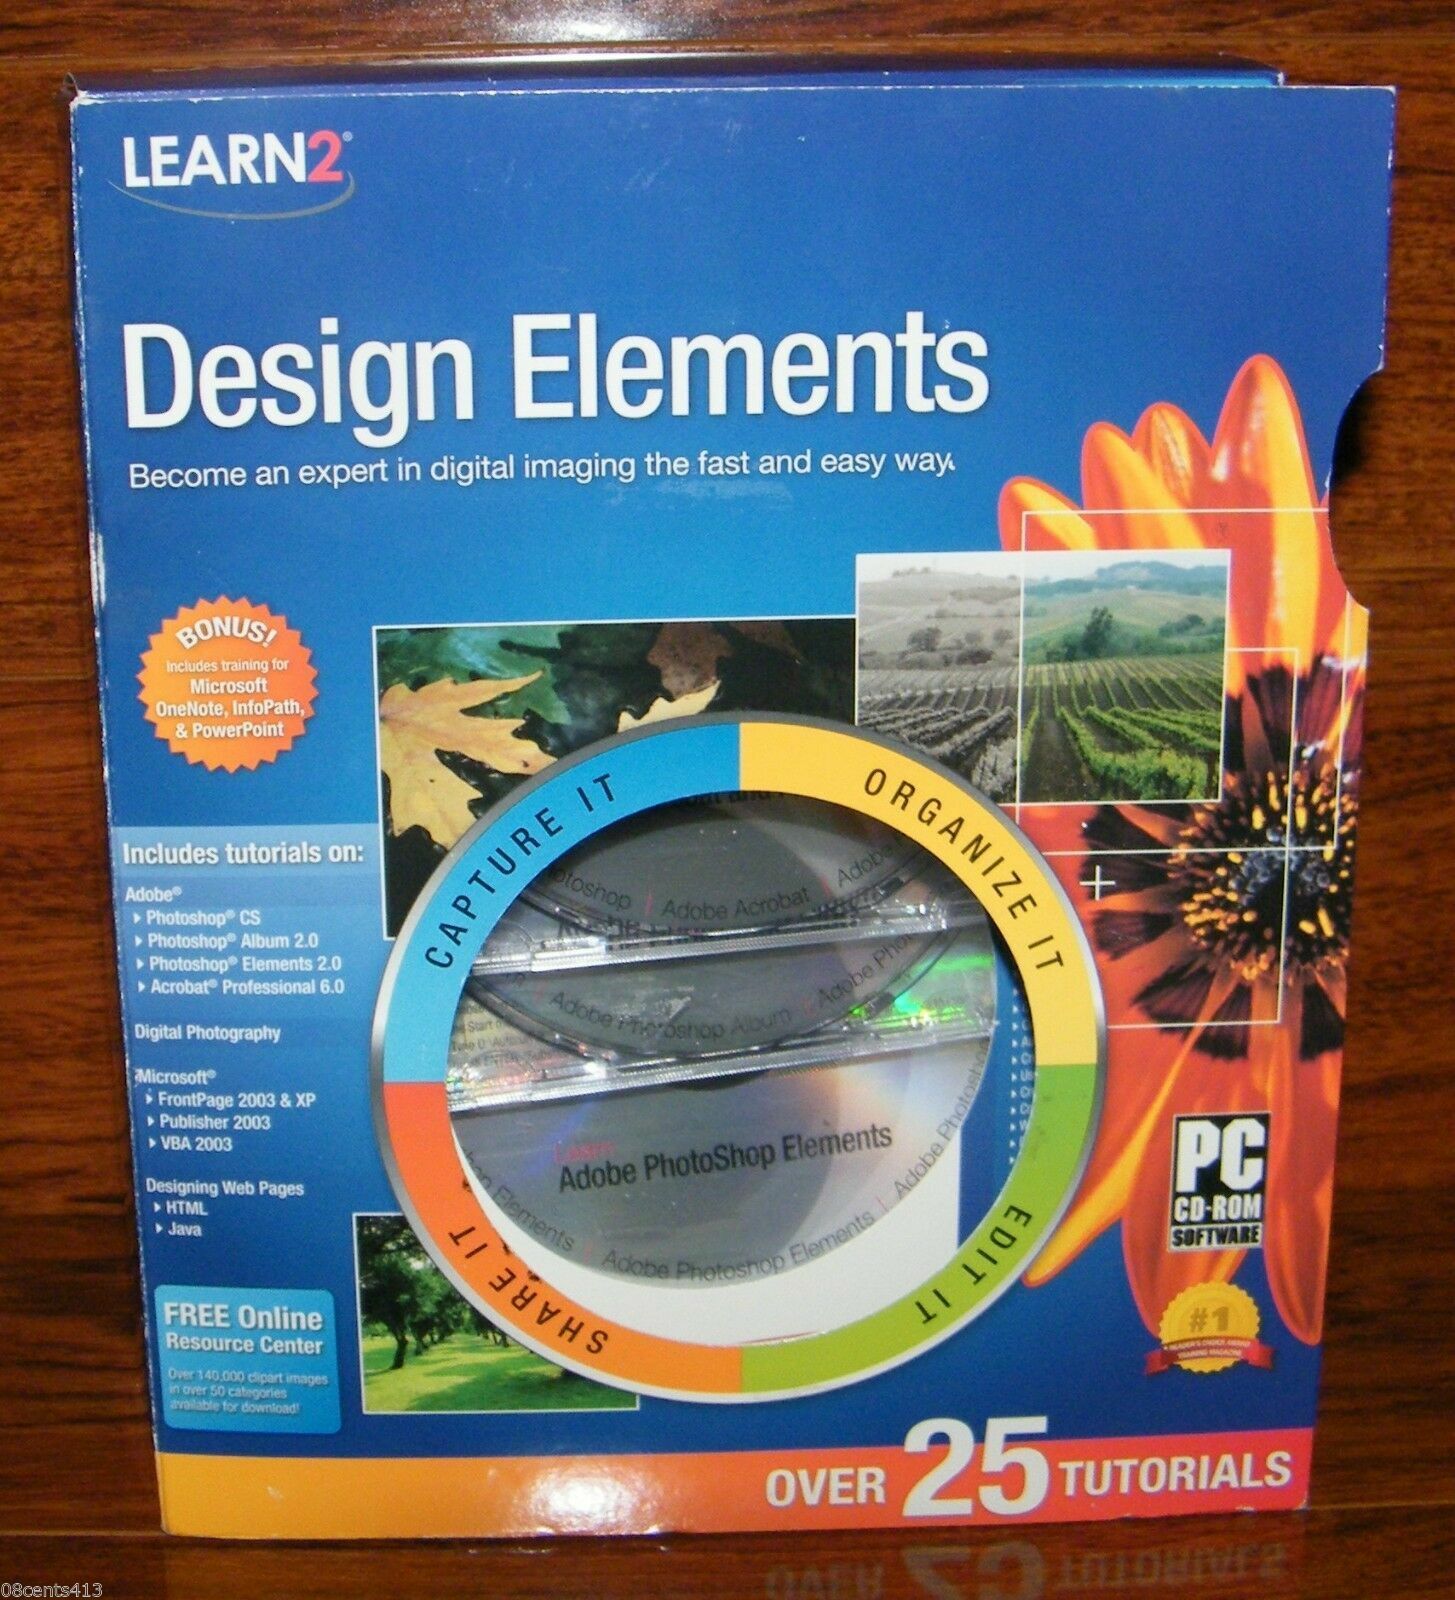 Learn 2 Digital Elements Design Suite (Windows CD-Rom) Full Version *NEW*